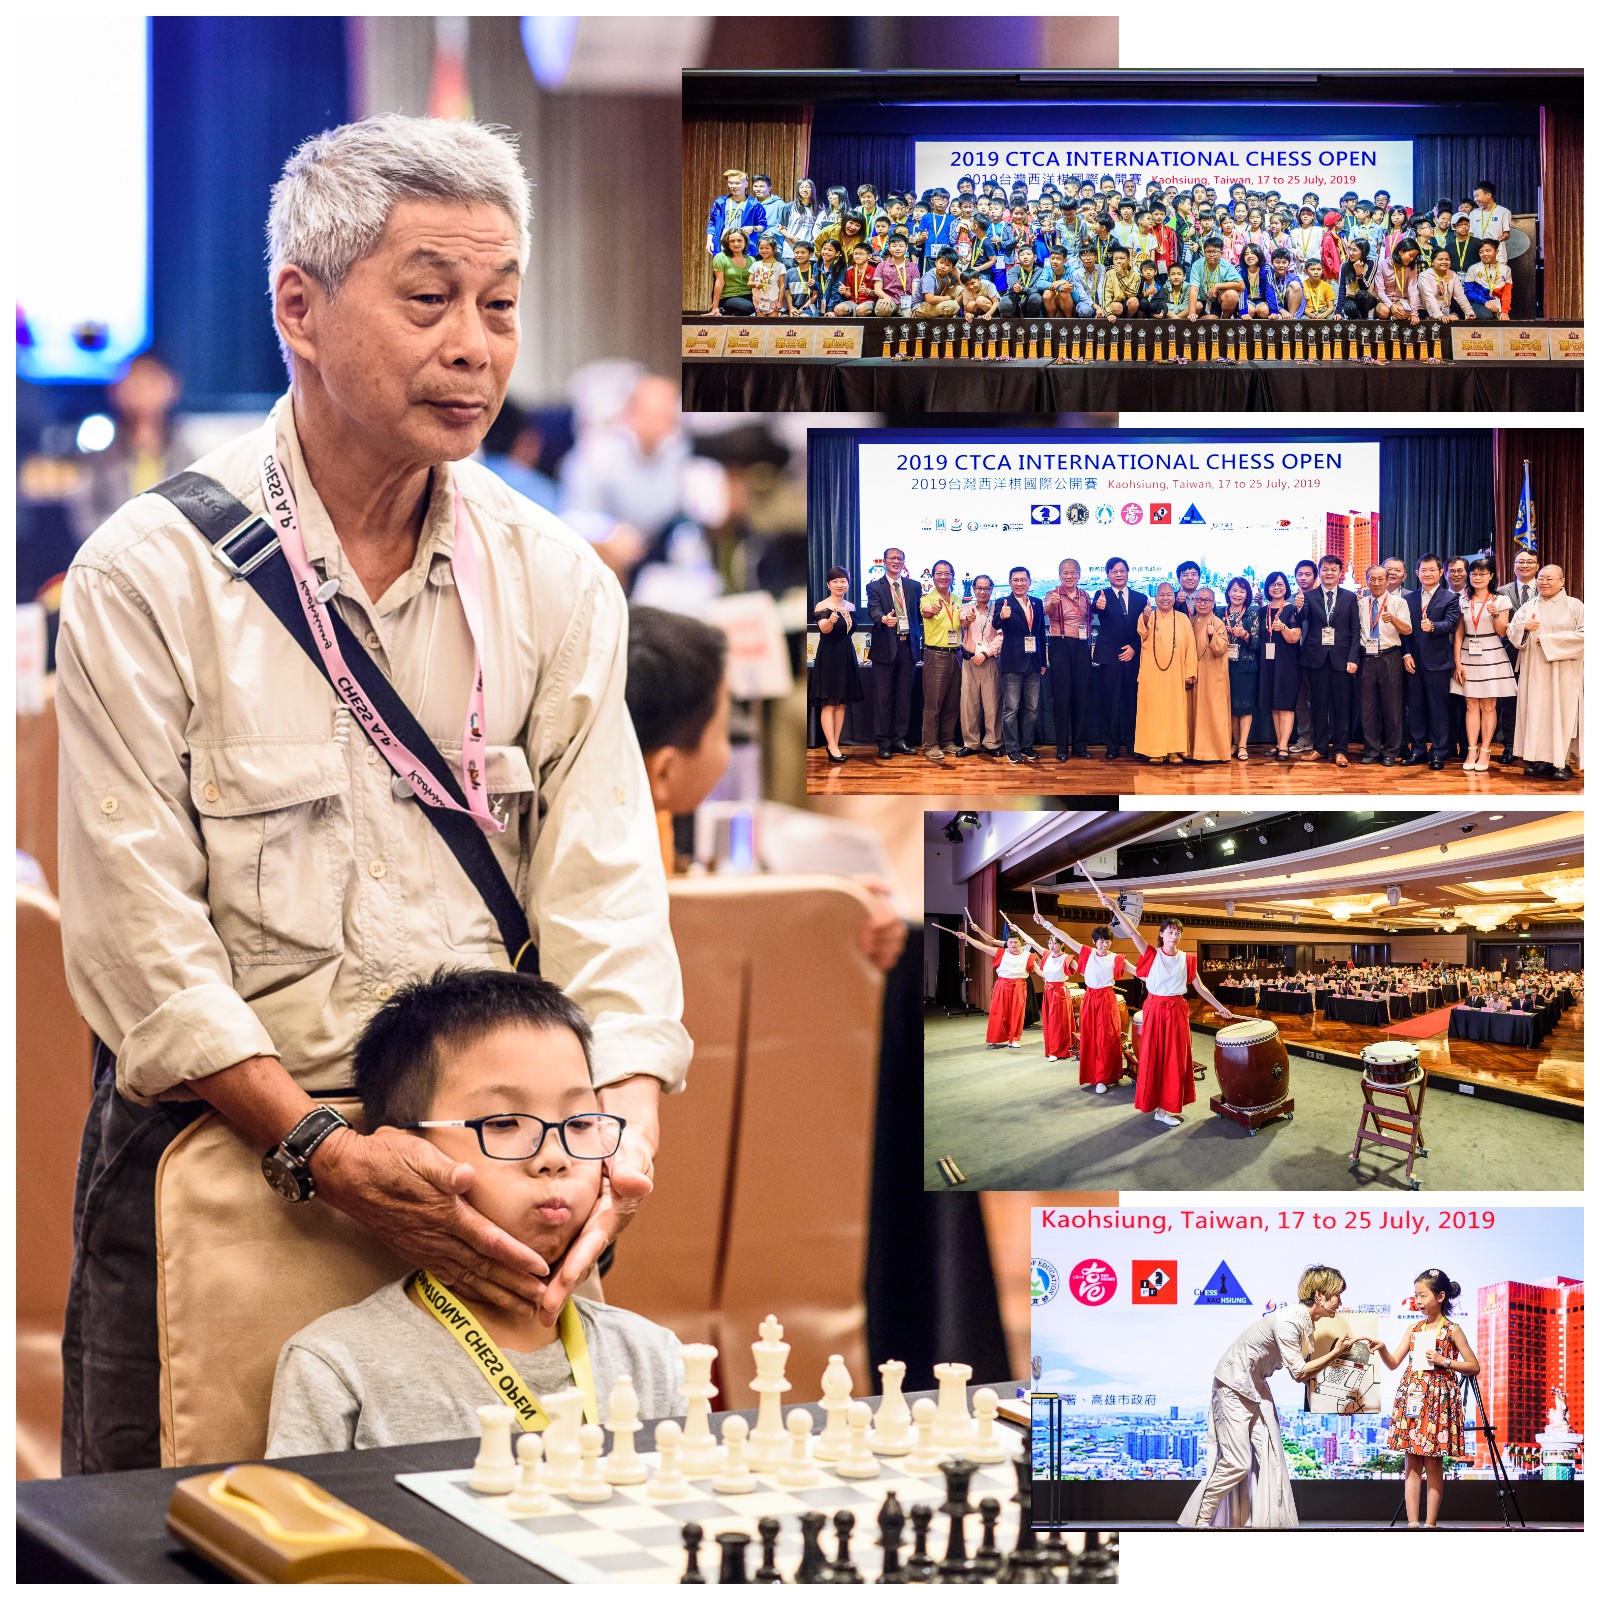 CTCA International Chess Open